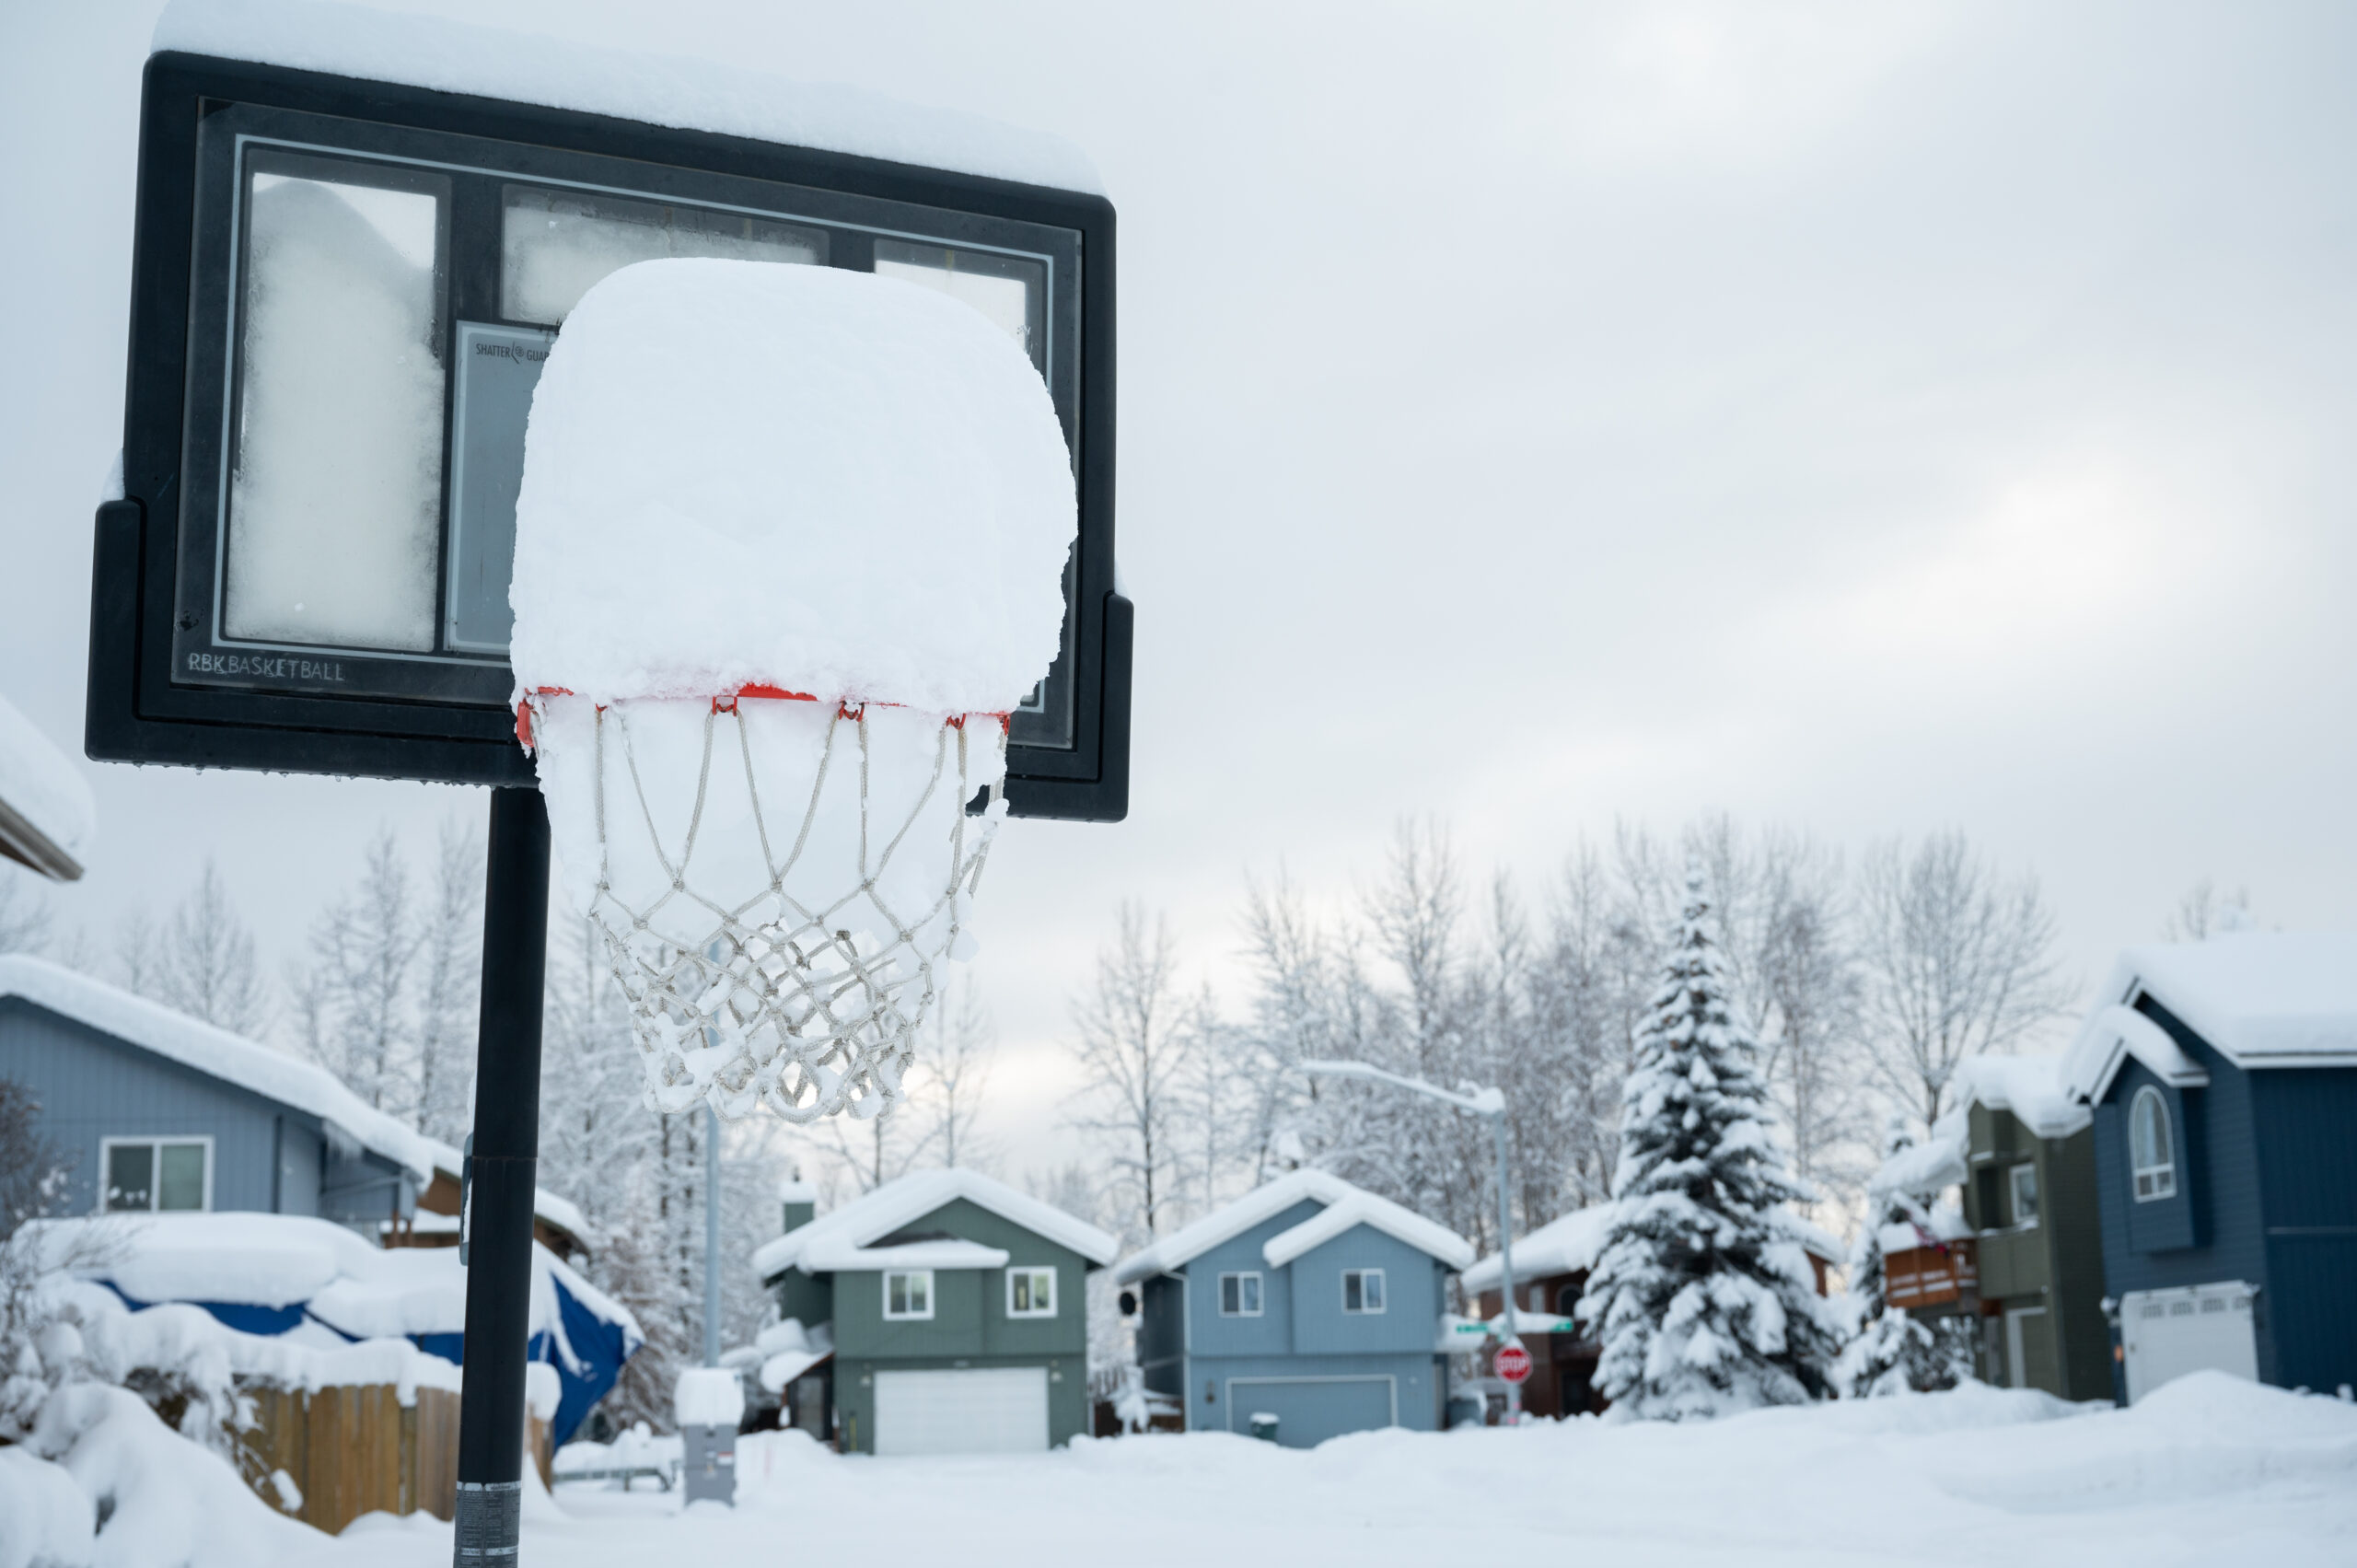 A basketball hoop full of snow